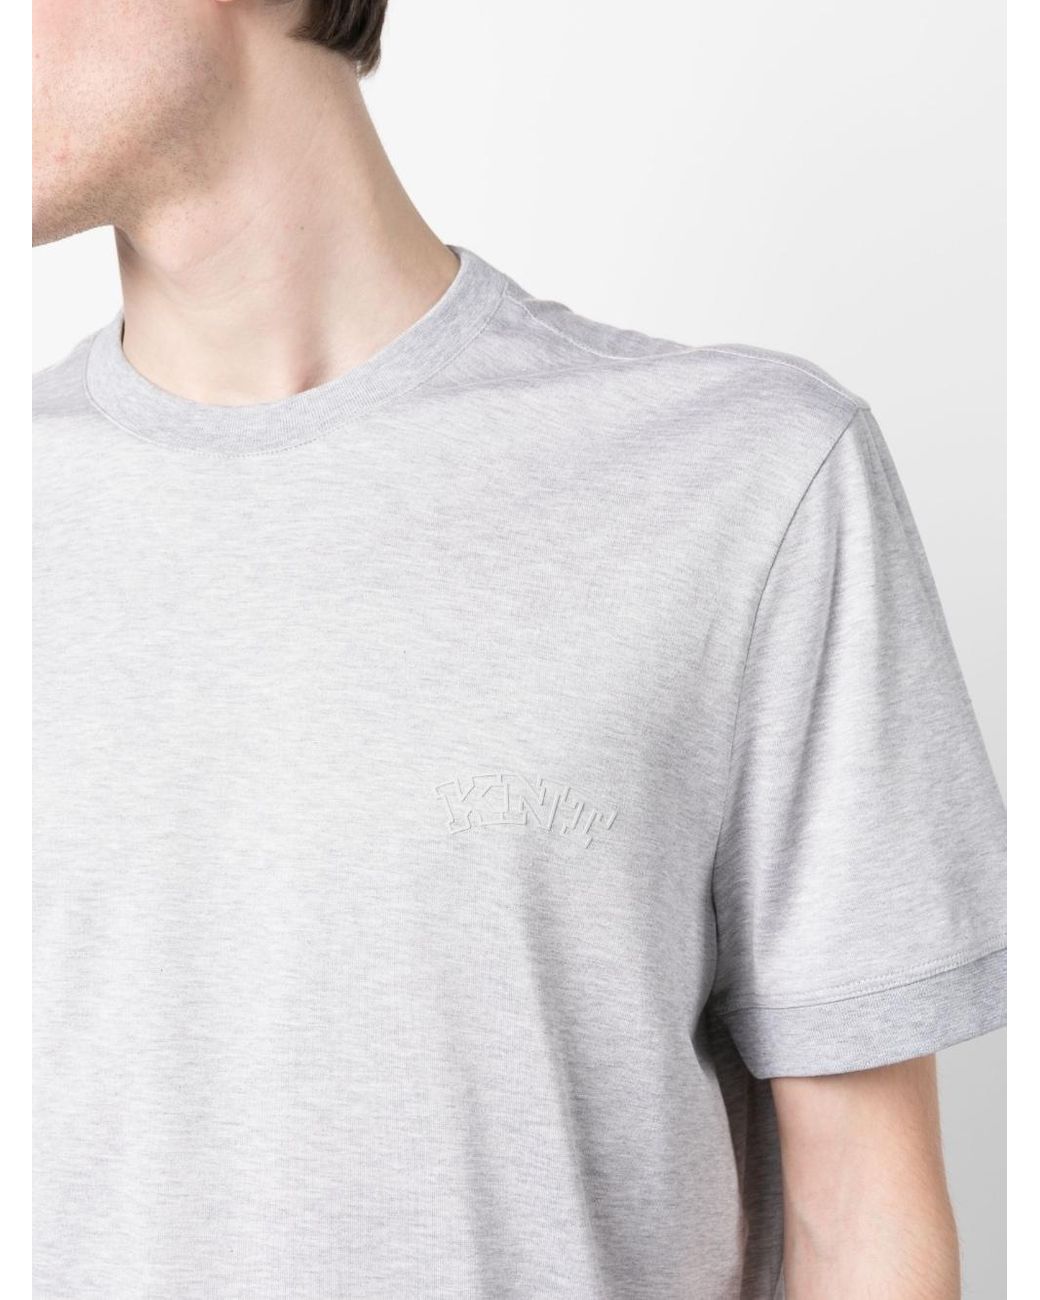 KITON キートン White Logo Embroidery T-shirt Tシャツ メンズ 春夏